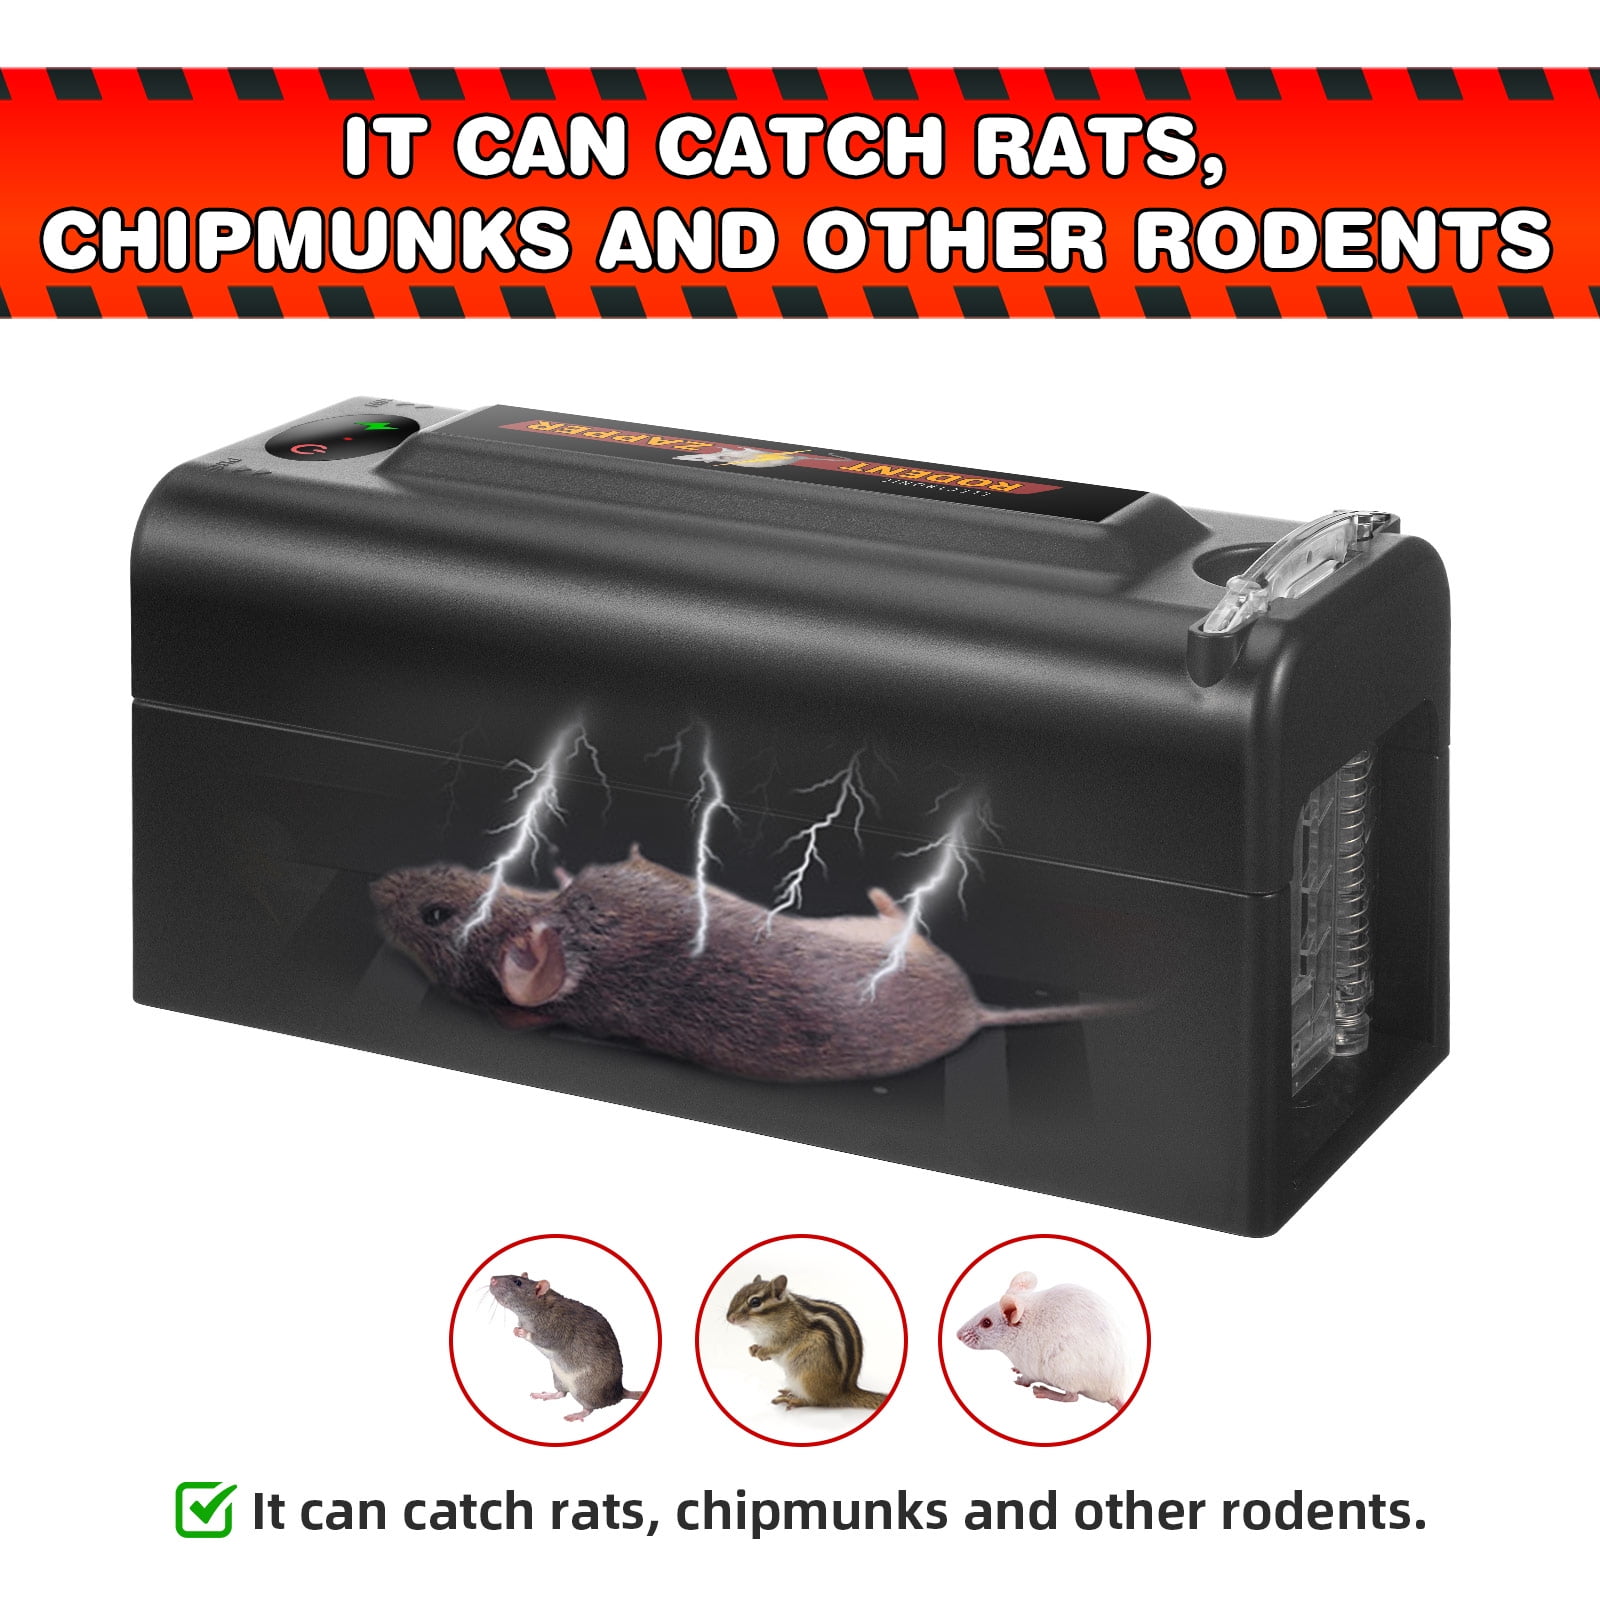 HomeTGR Indoor Electric Rat Trap - Mouse Trap for Home Pest Control